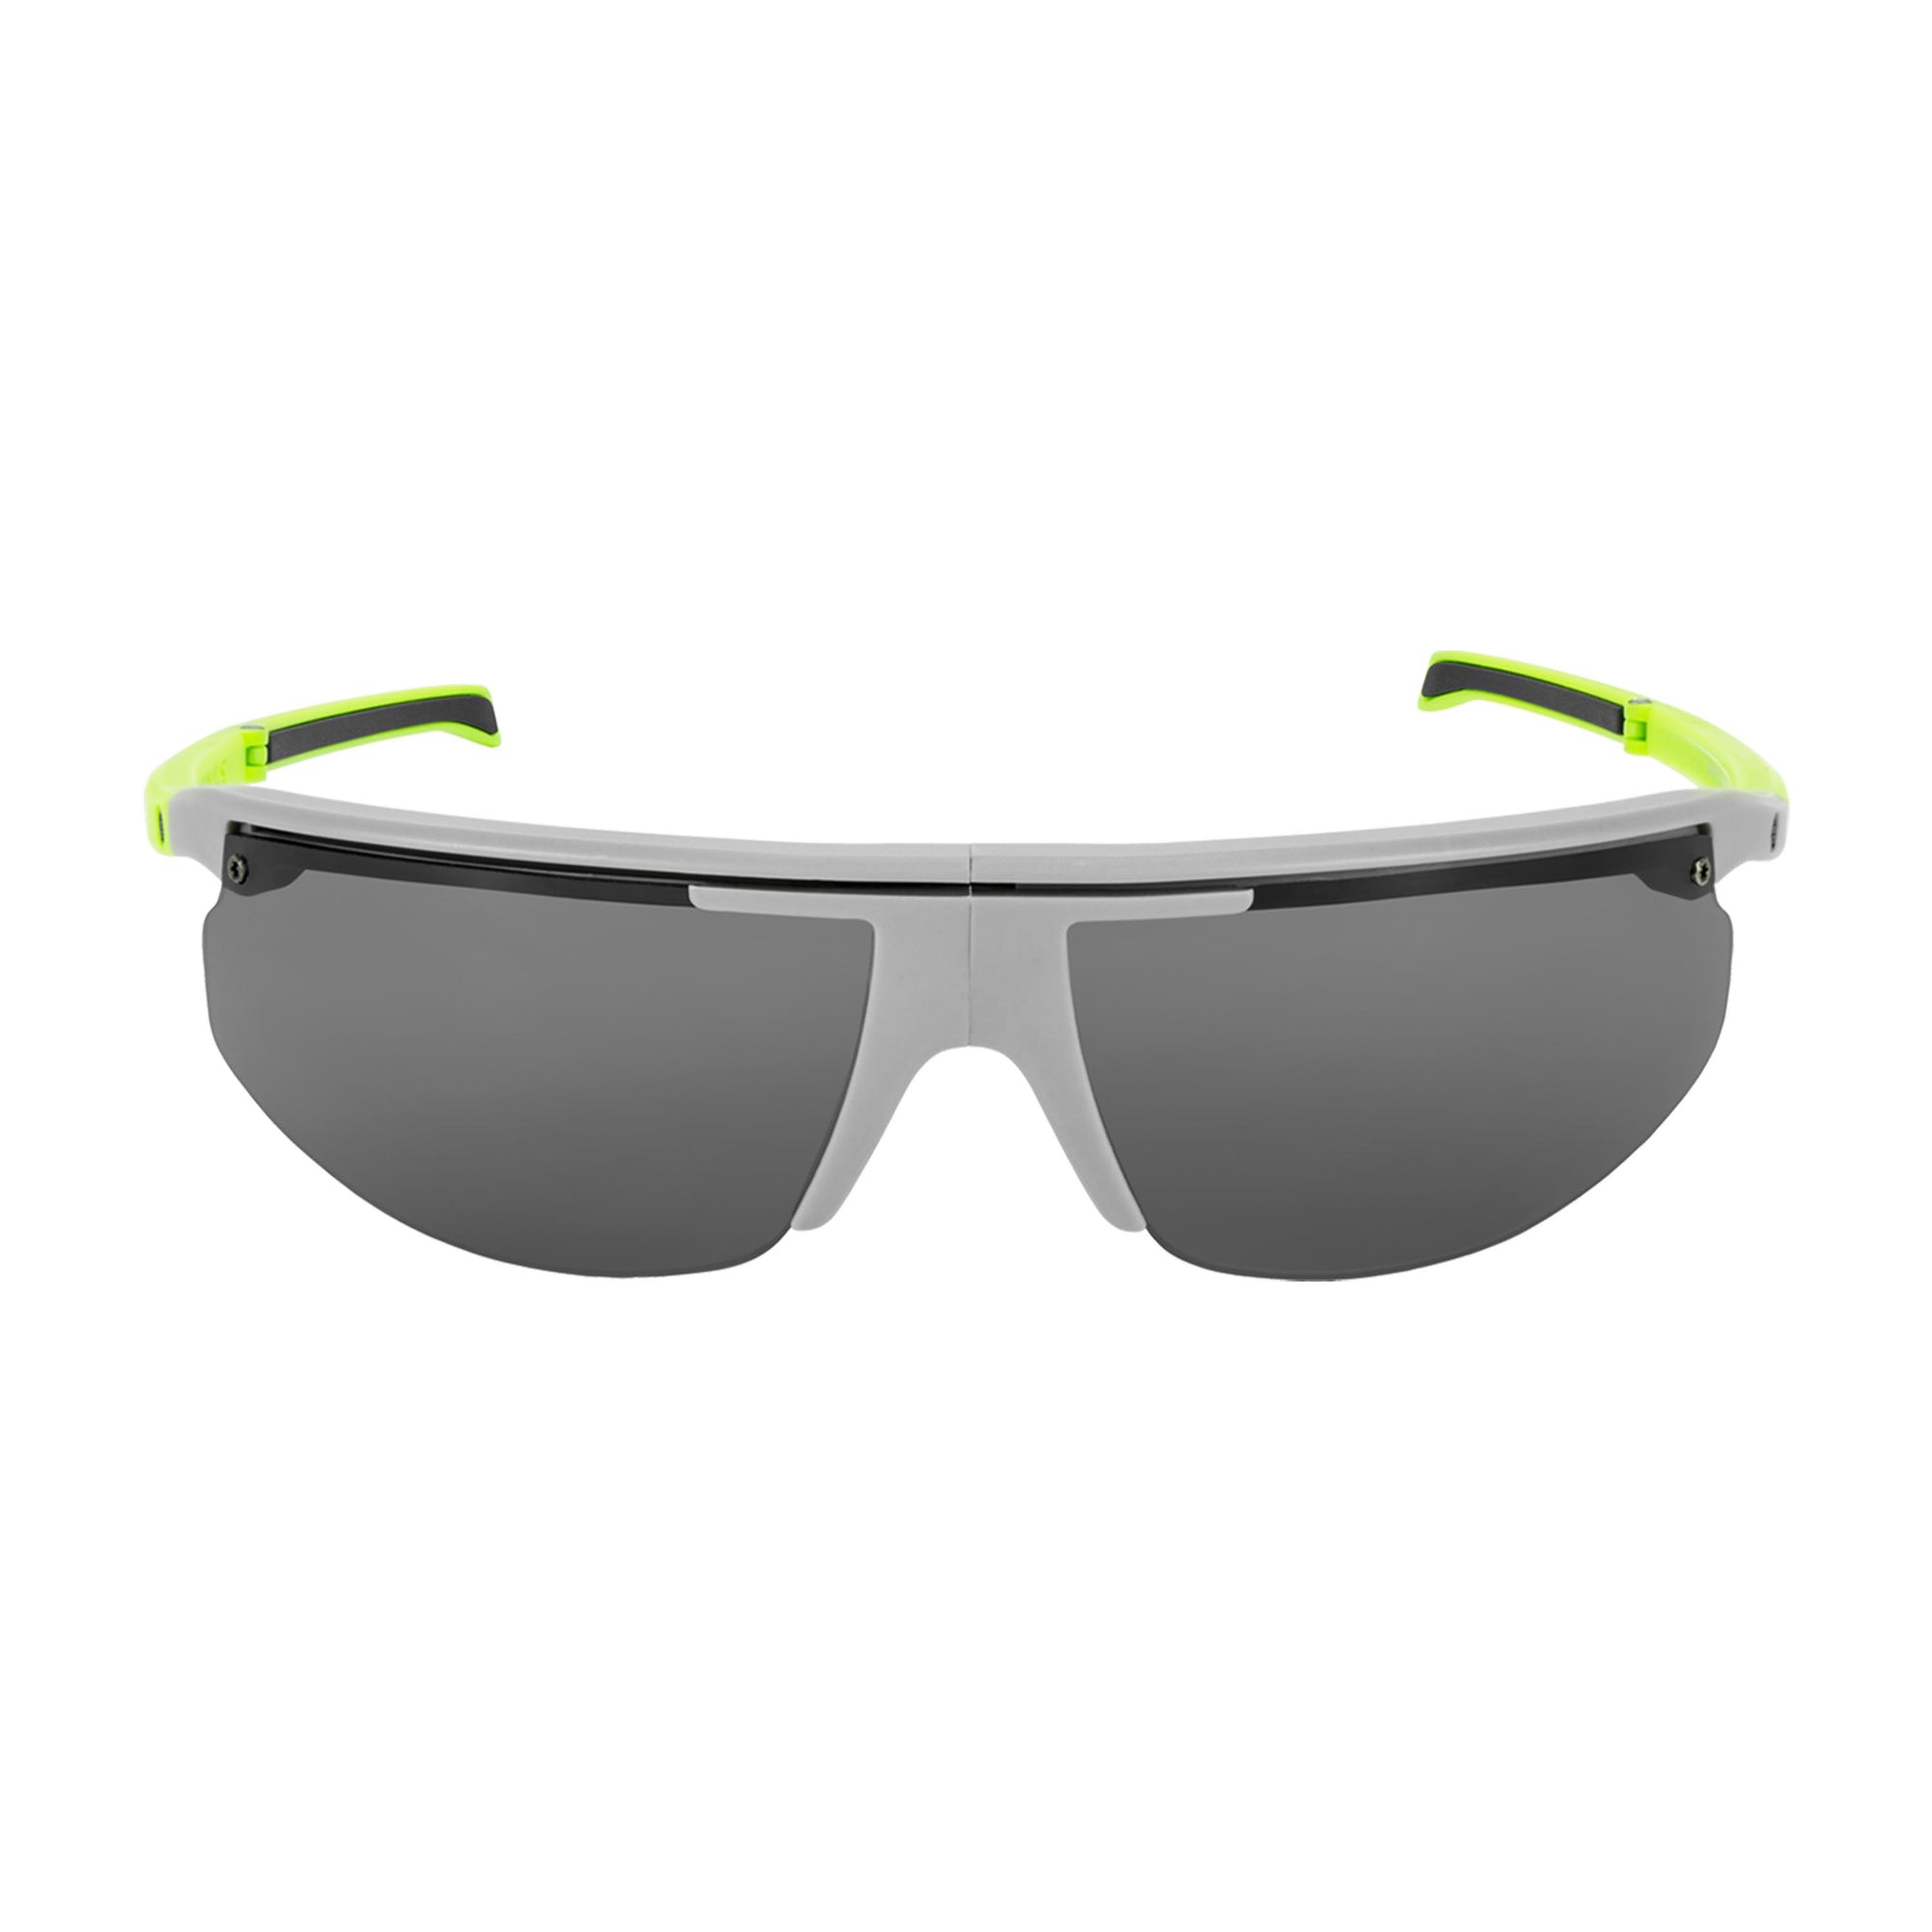 Popticals, Premium Compact Sunglasses, PopStar, 010040-EMGP, Polarized Sunglasses, Matte Gray/Green Frame, Gray Lenses, Glam View